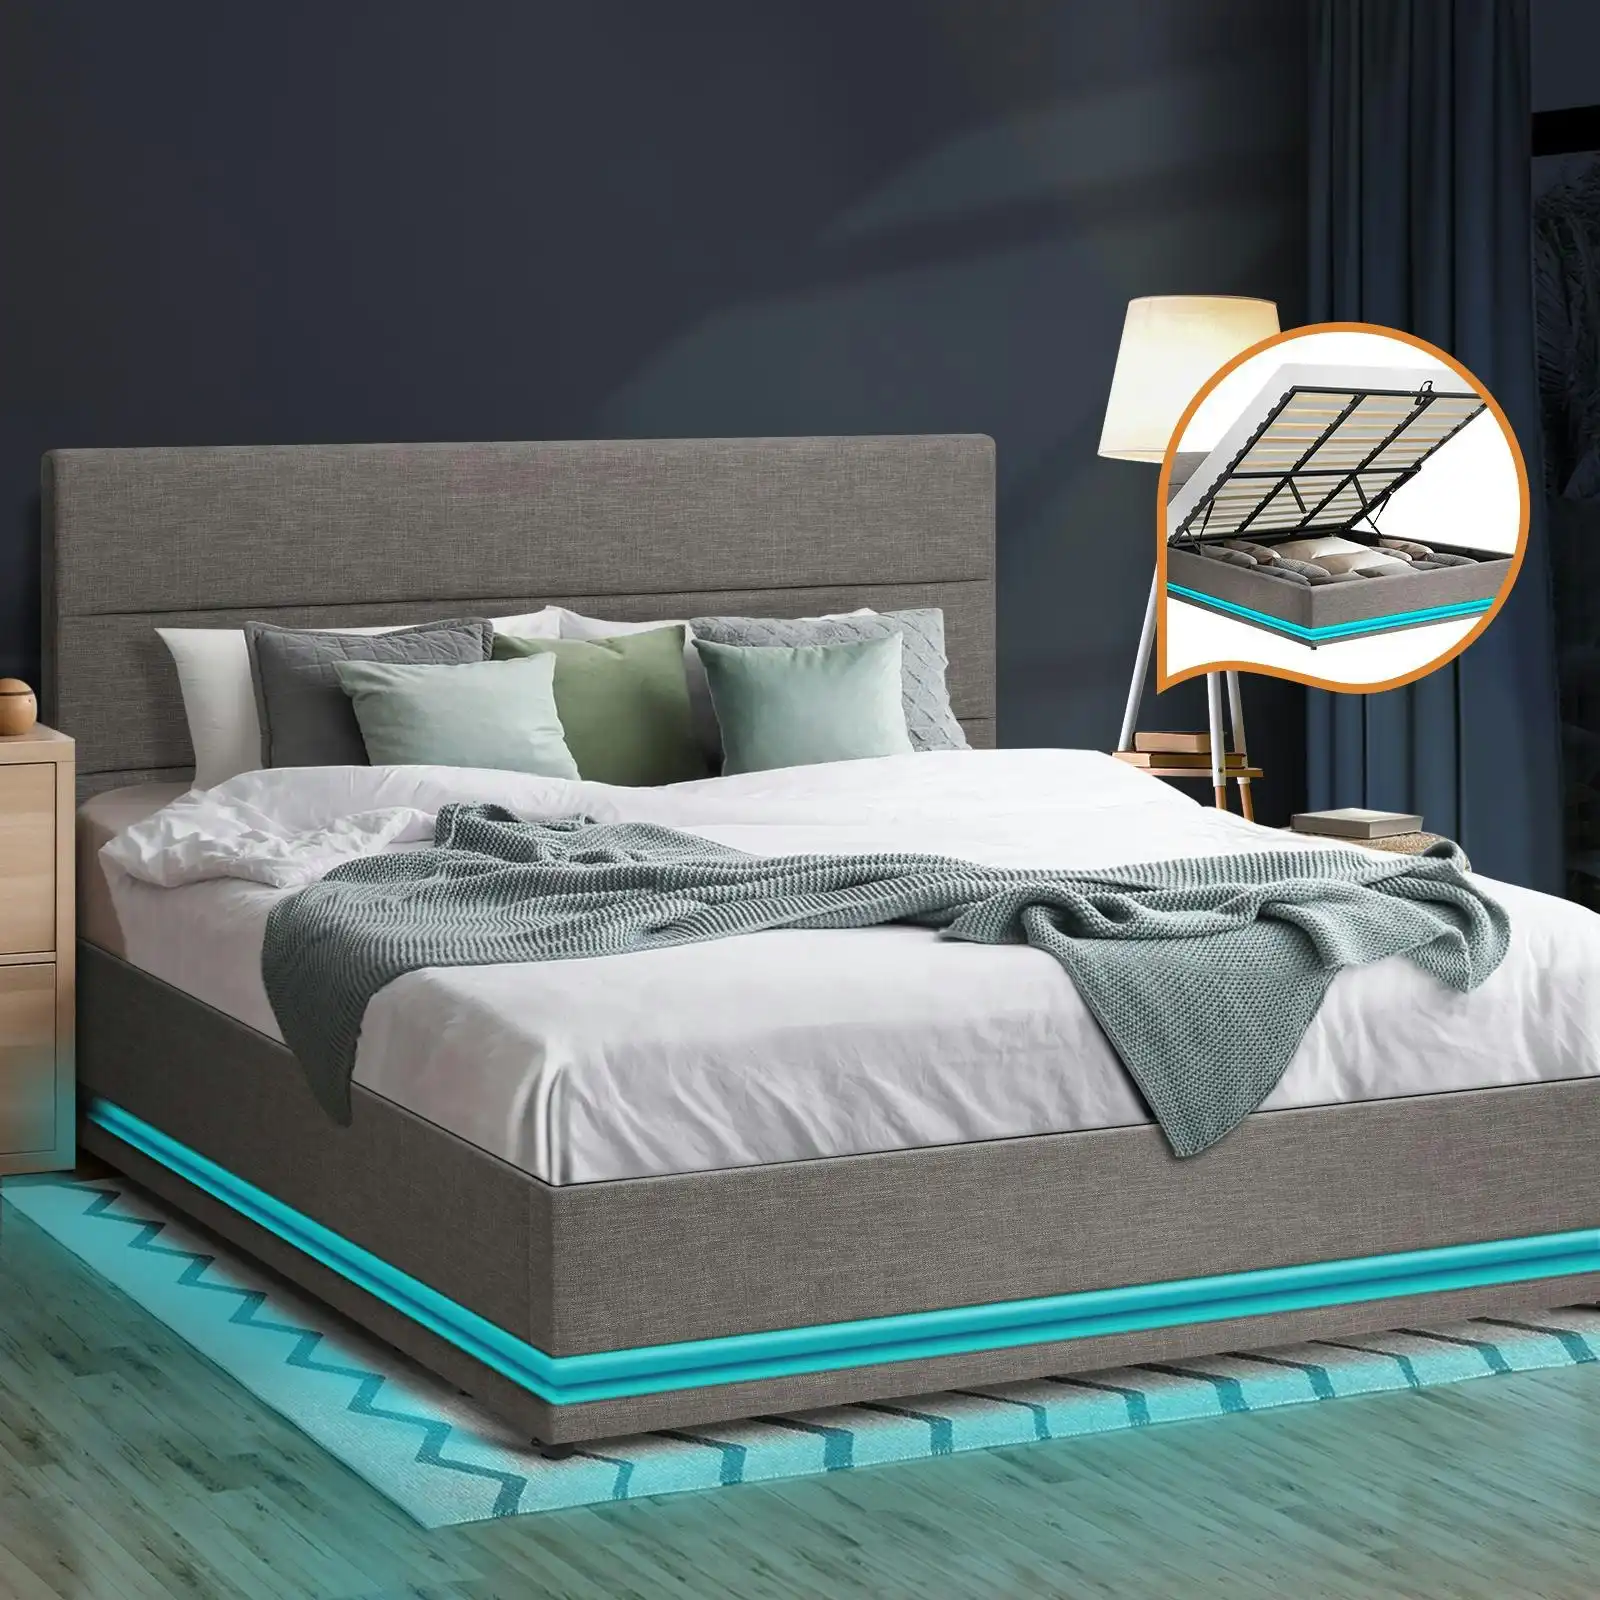 Oikiture Bed Frame King Size Bed Platform RGB LED Gas Lift Base Storage Grey